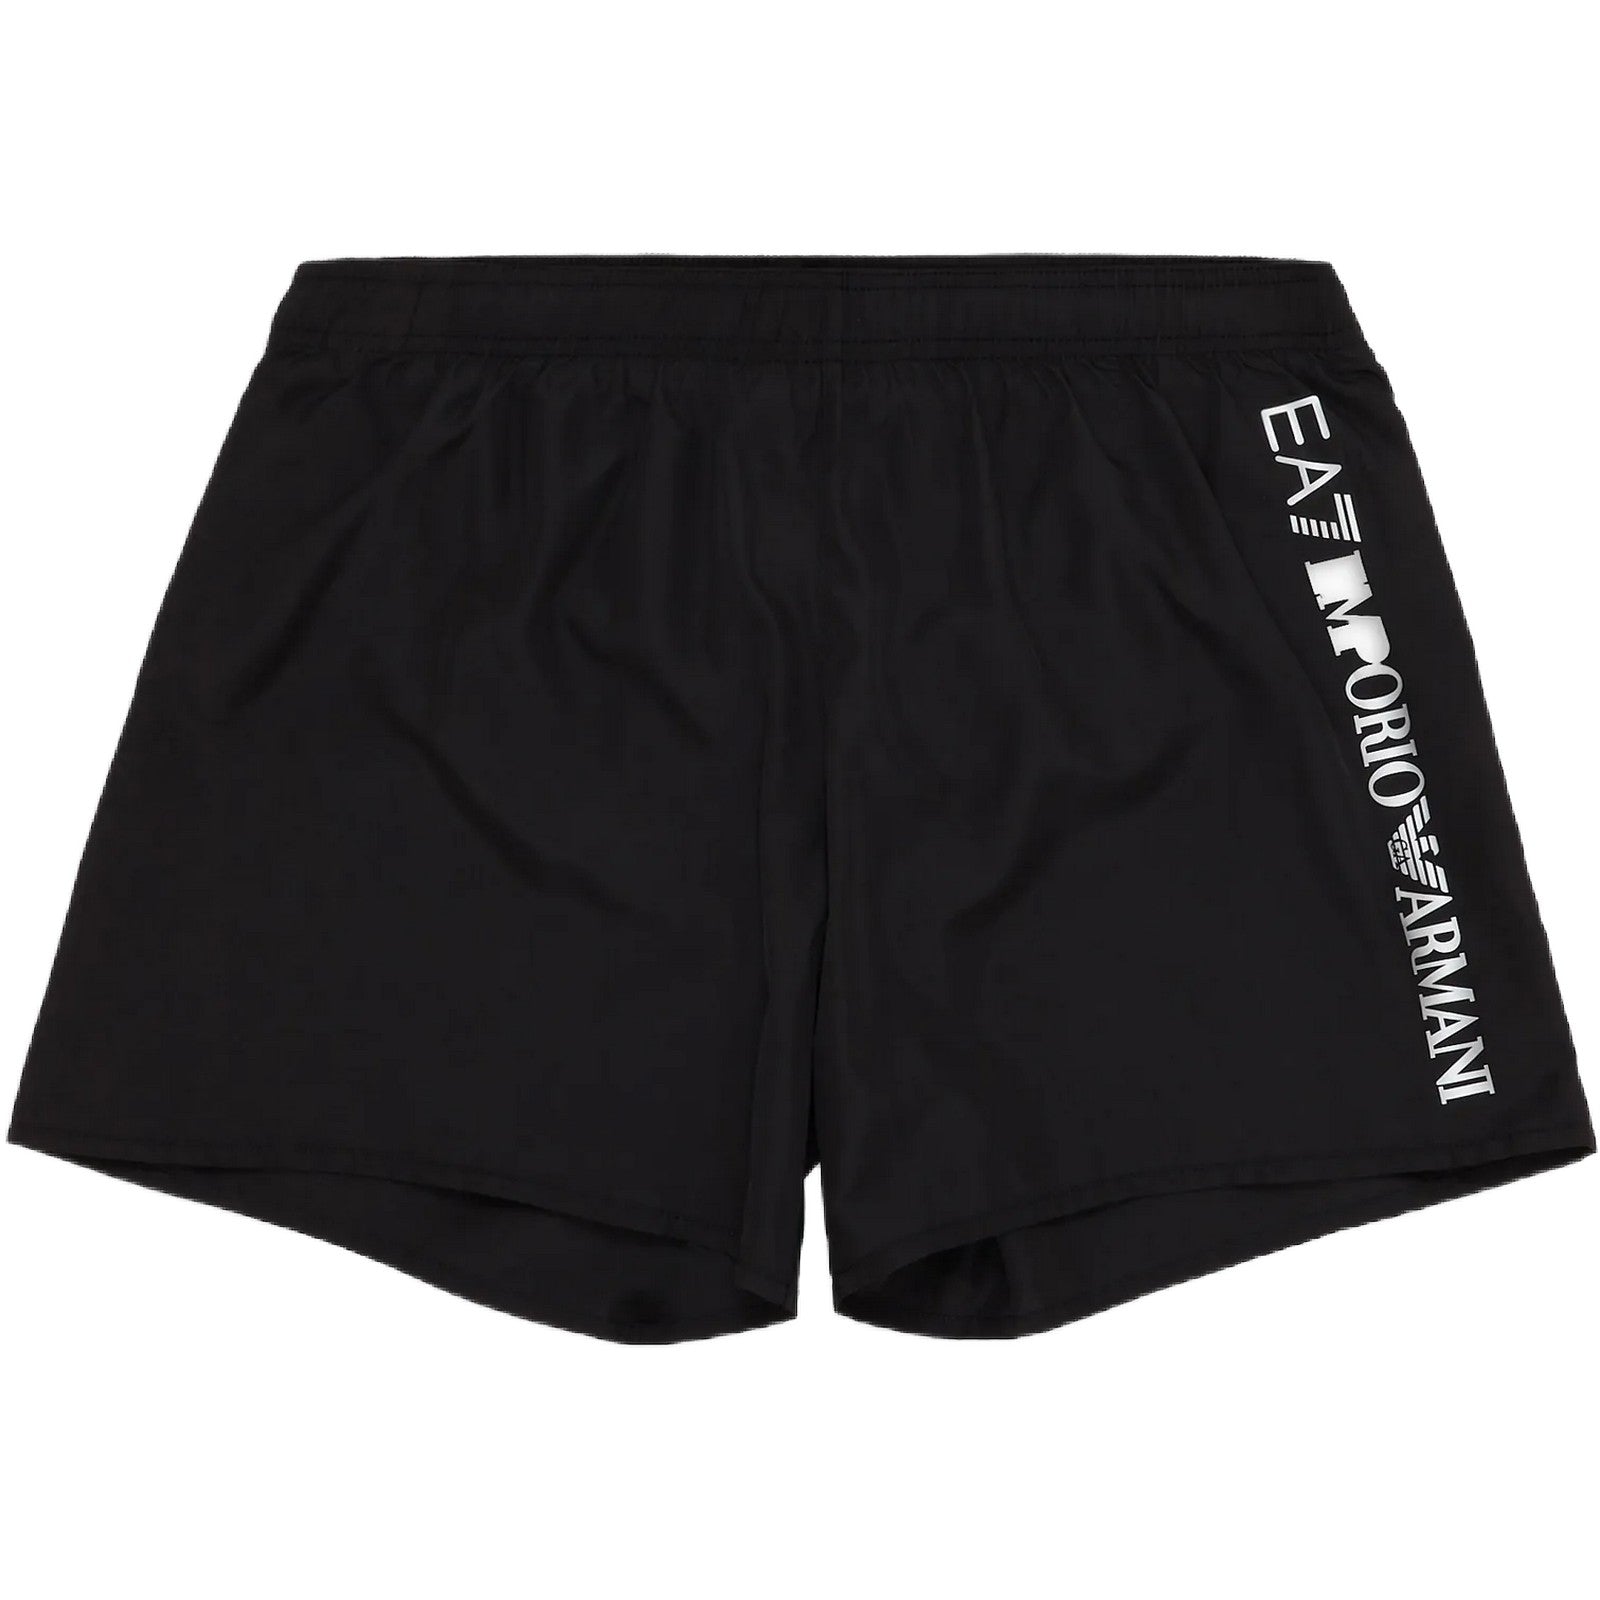 Pantaloncini e calzoncini Uomo Emporio Armani - Boxer Beachwear - Nero